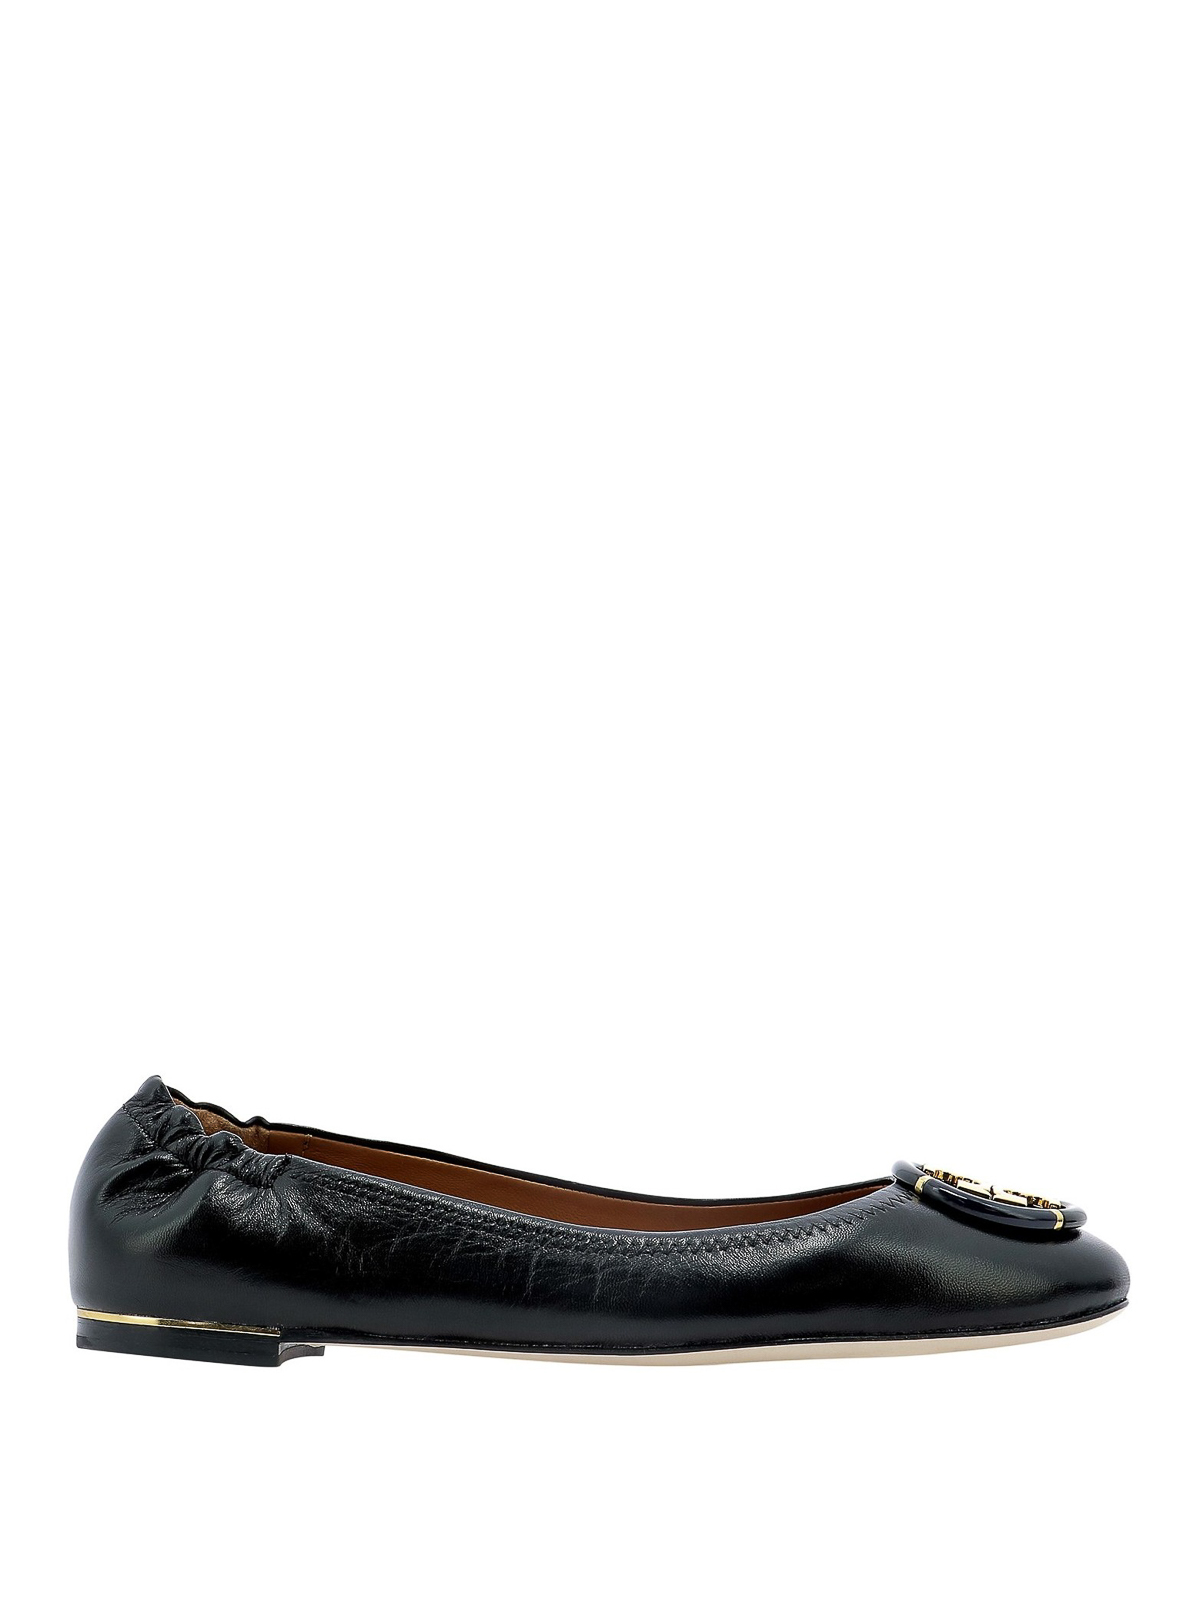 Flat shoes Tory Burch - Minnie flats - 74062006 | Shop online at iKRIX